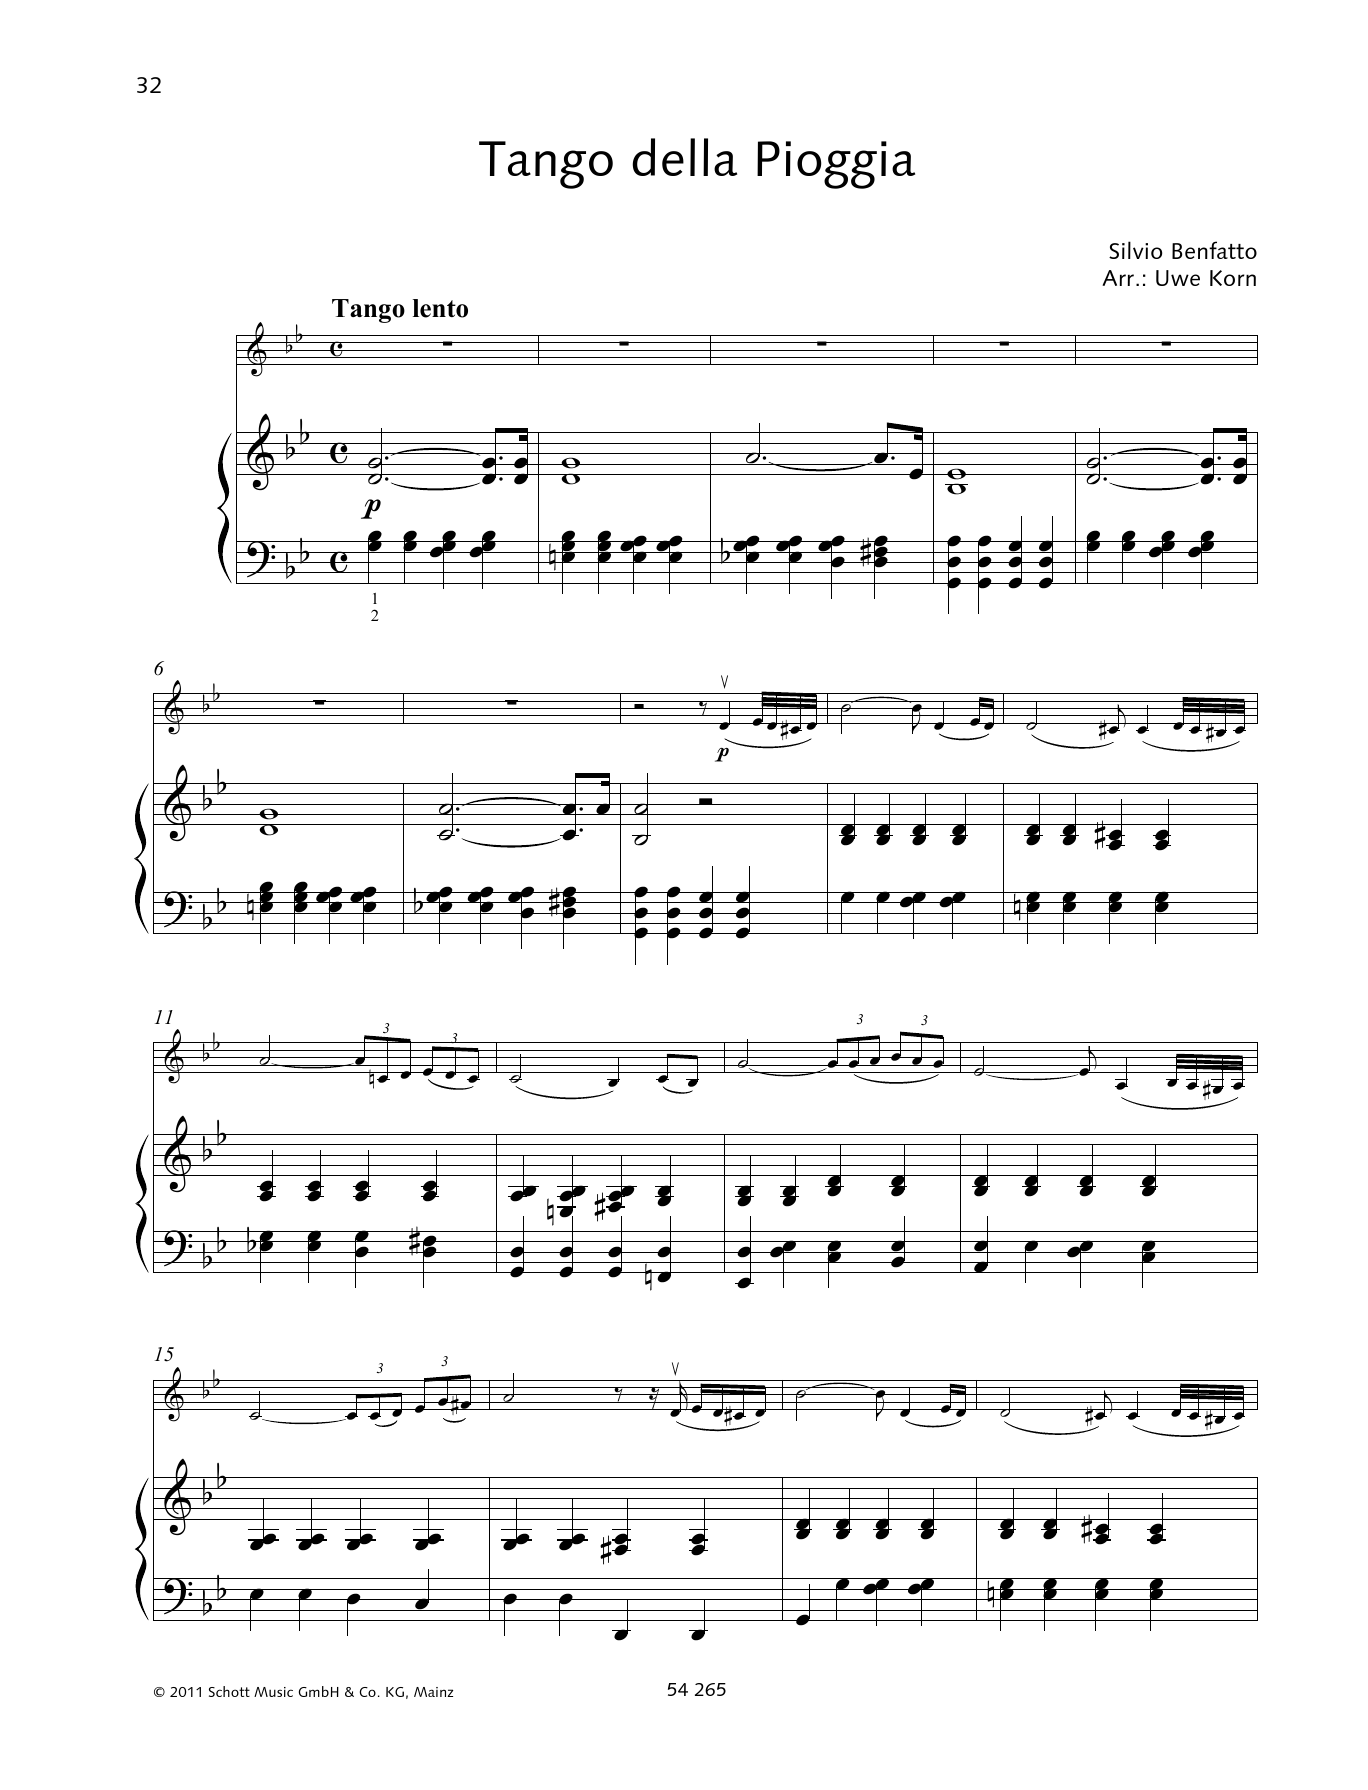 Download Silvio Benfatto Tango della Piogga Sheet Music and learn how to play String Solo PDF digital score in minutes